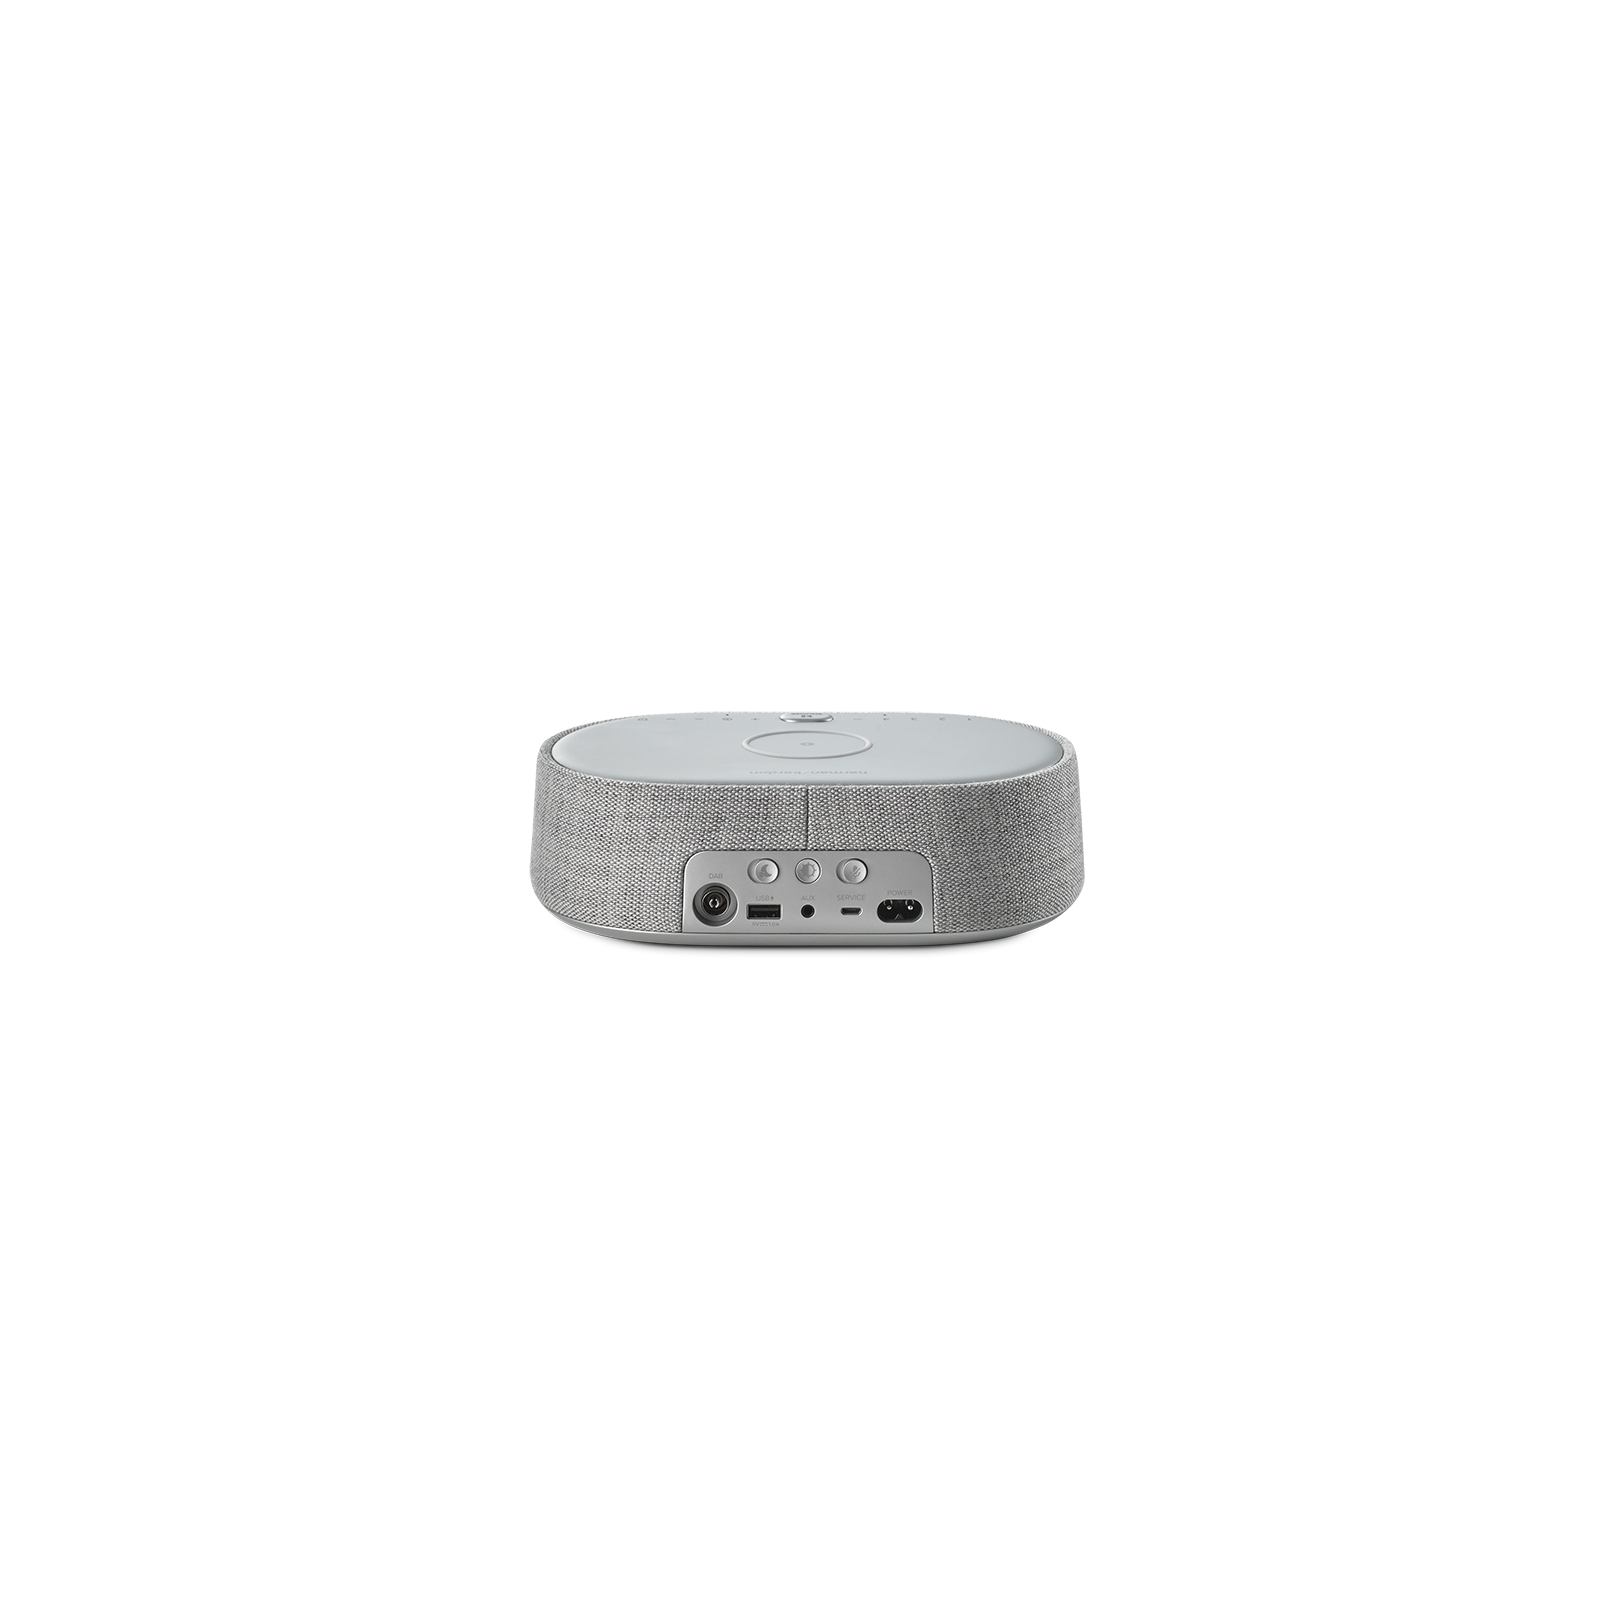 Harman Kardon Citation Oasis DAB - Grey - Voice-controlled speaker with DAB/DAB+ radio and wireless phone charging - Back